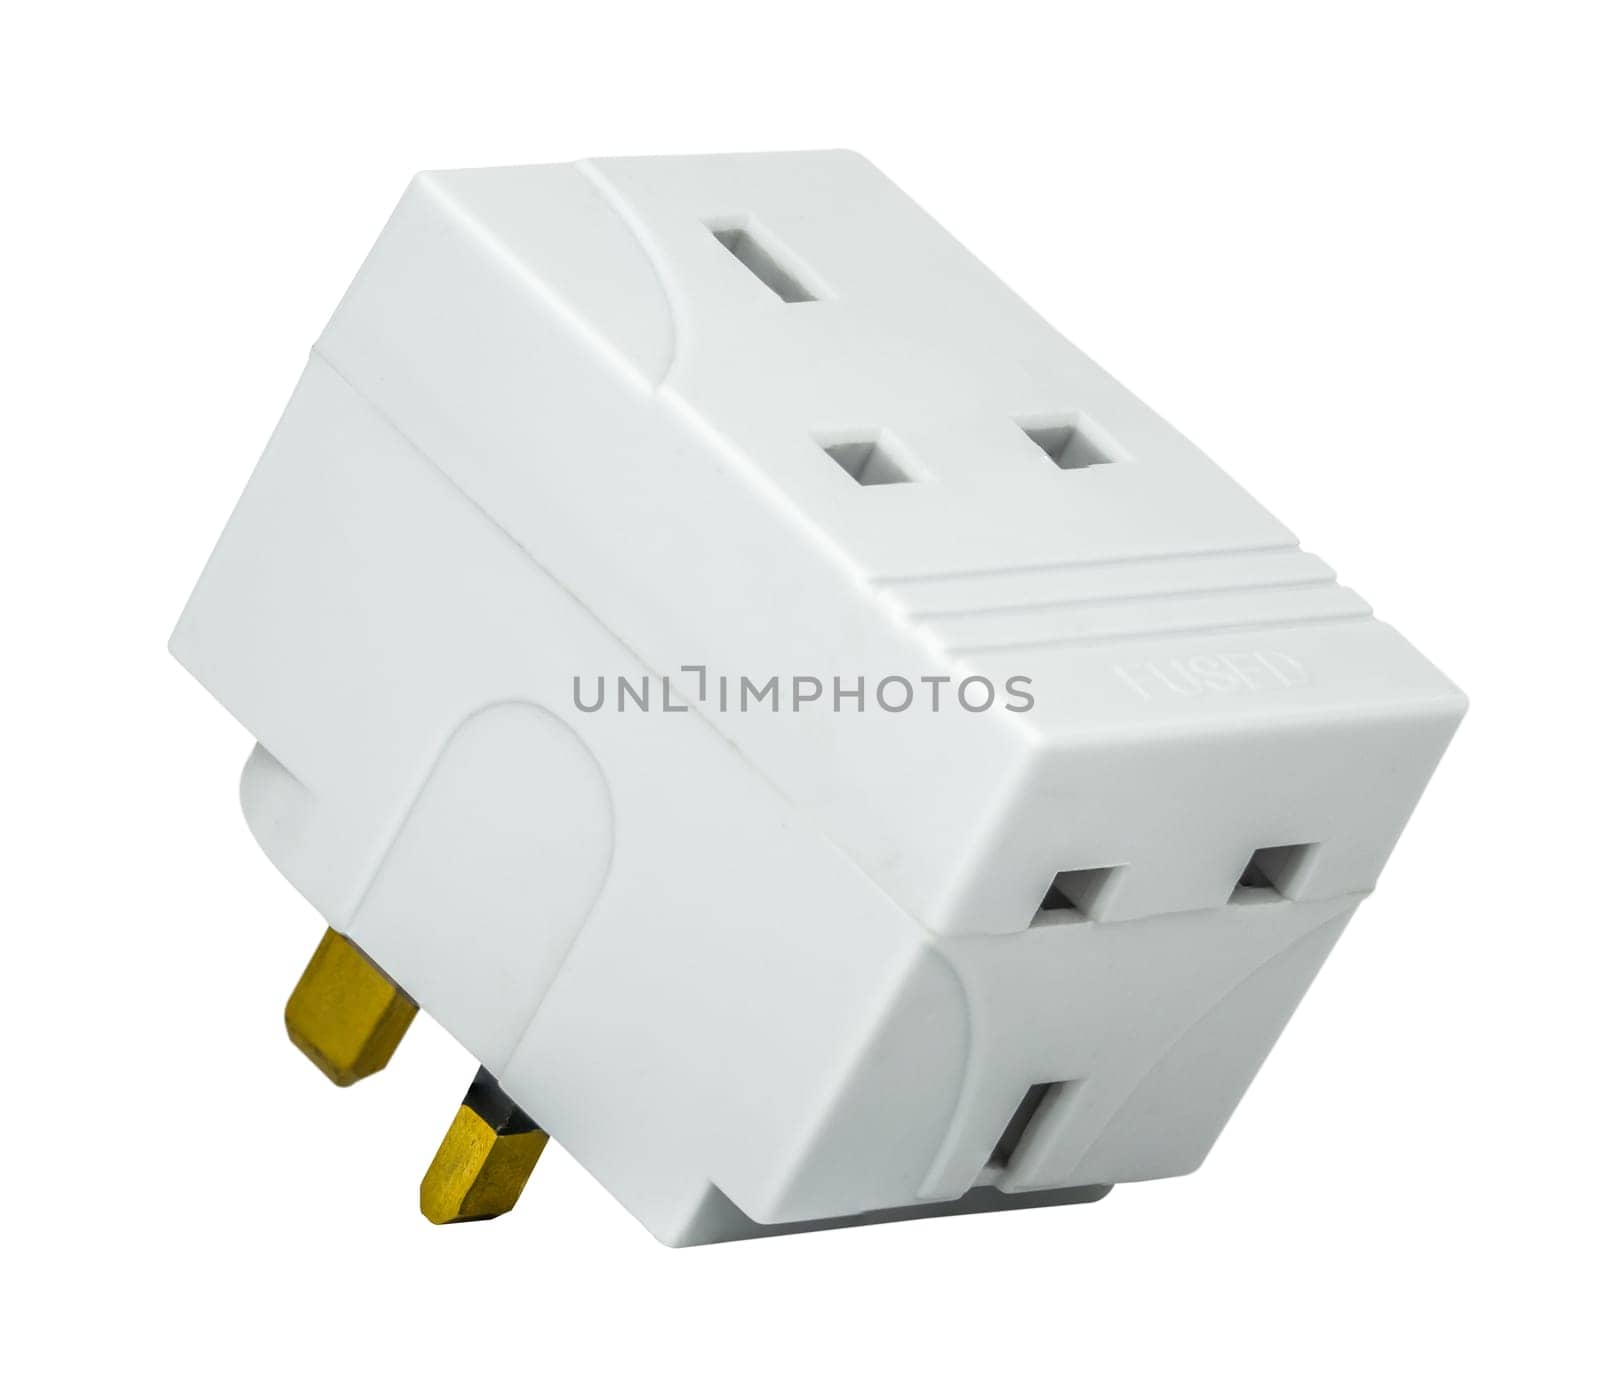 Isolated UK Mains Power Cube Adaptor Plug On A White Background